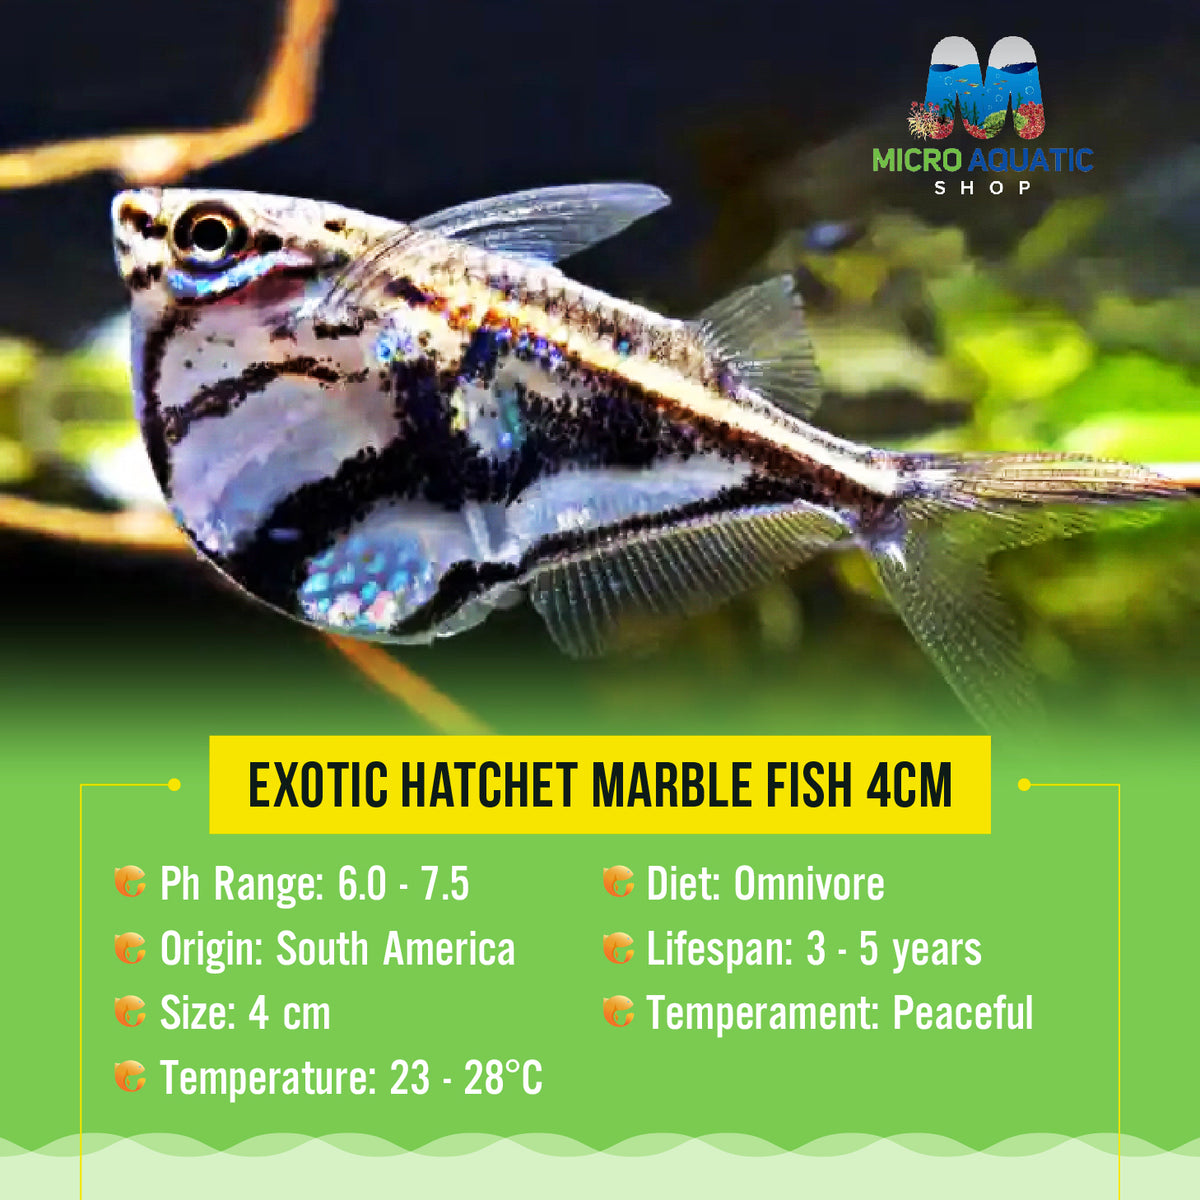 Exotic Hatchet Marble Fish 4cm